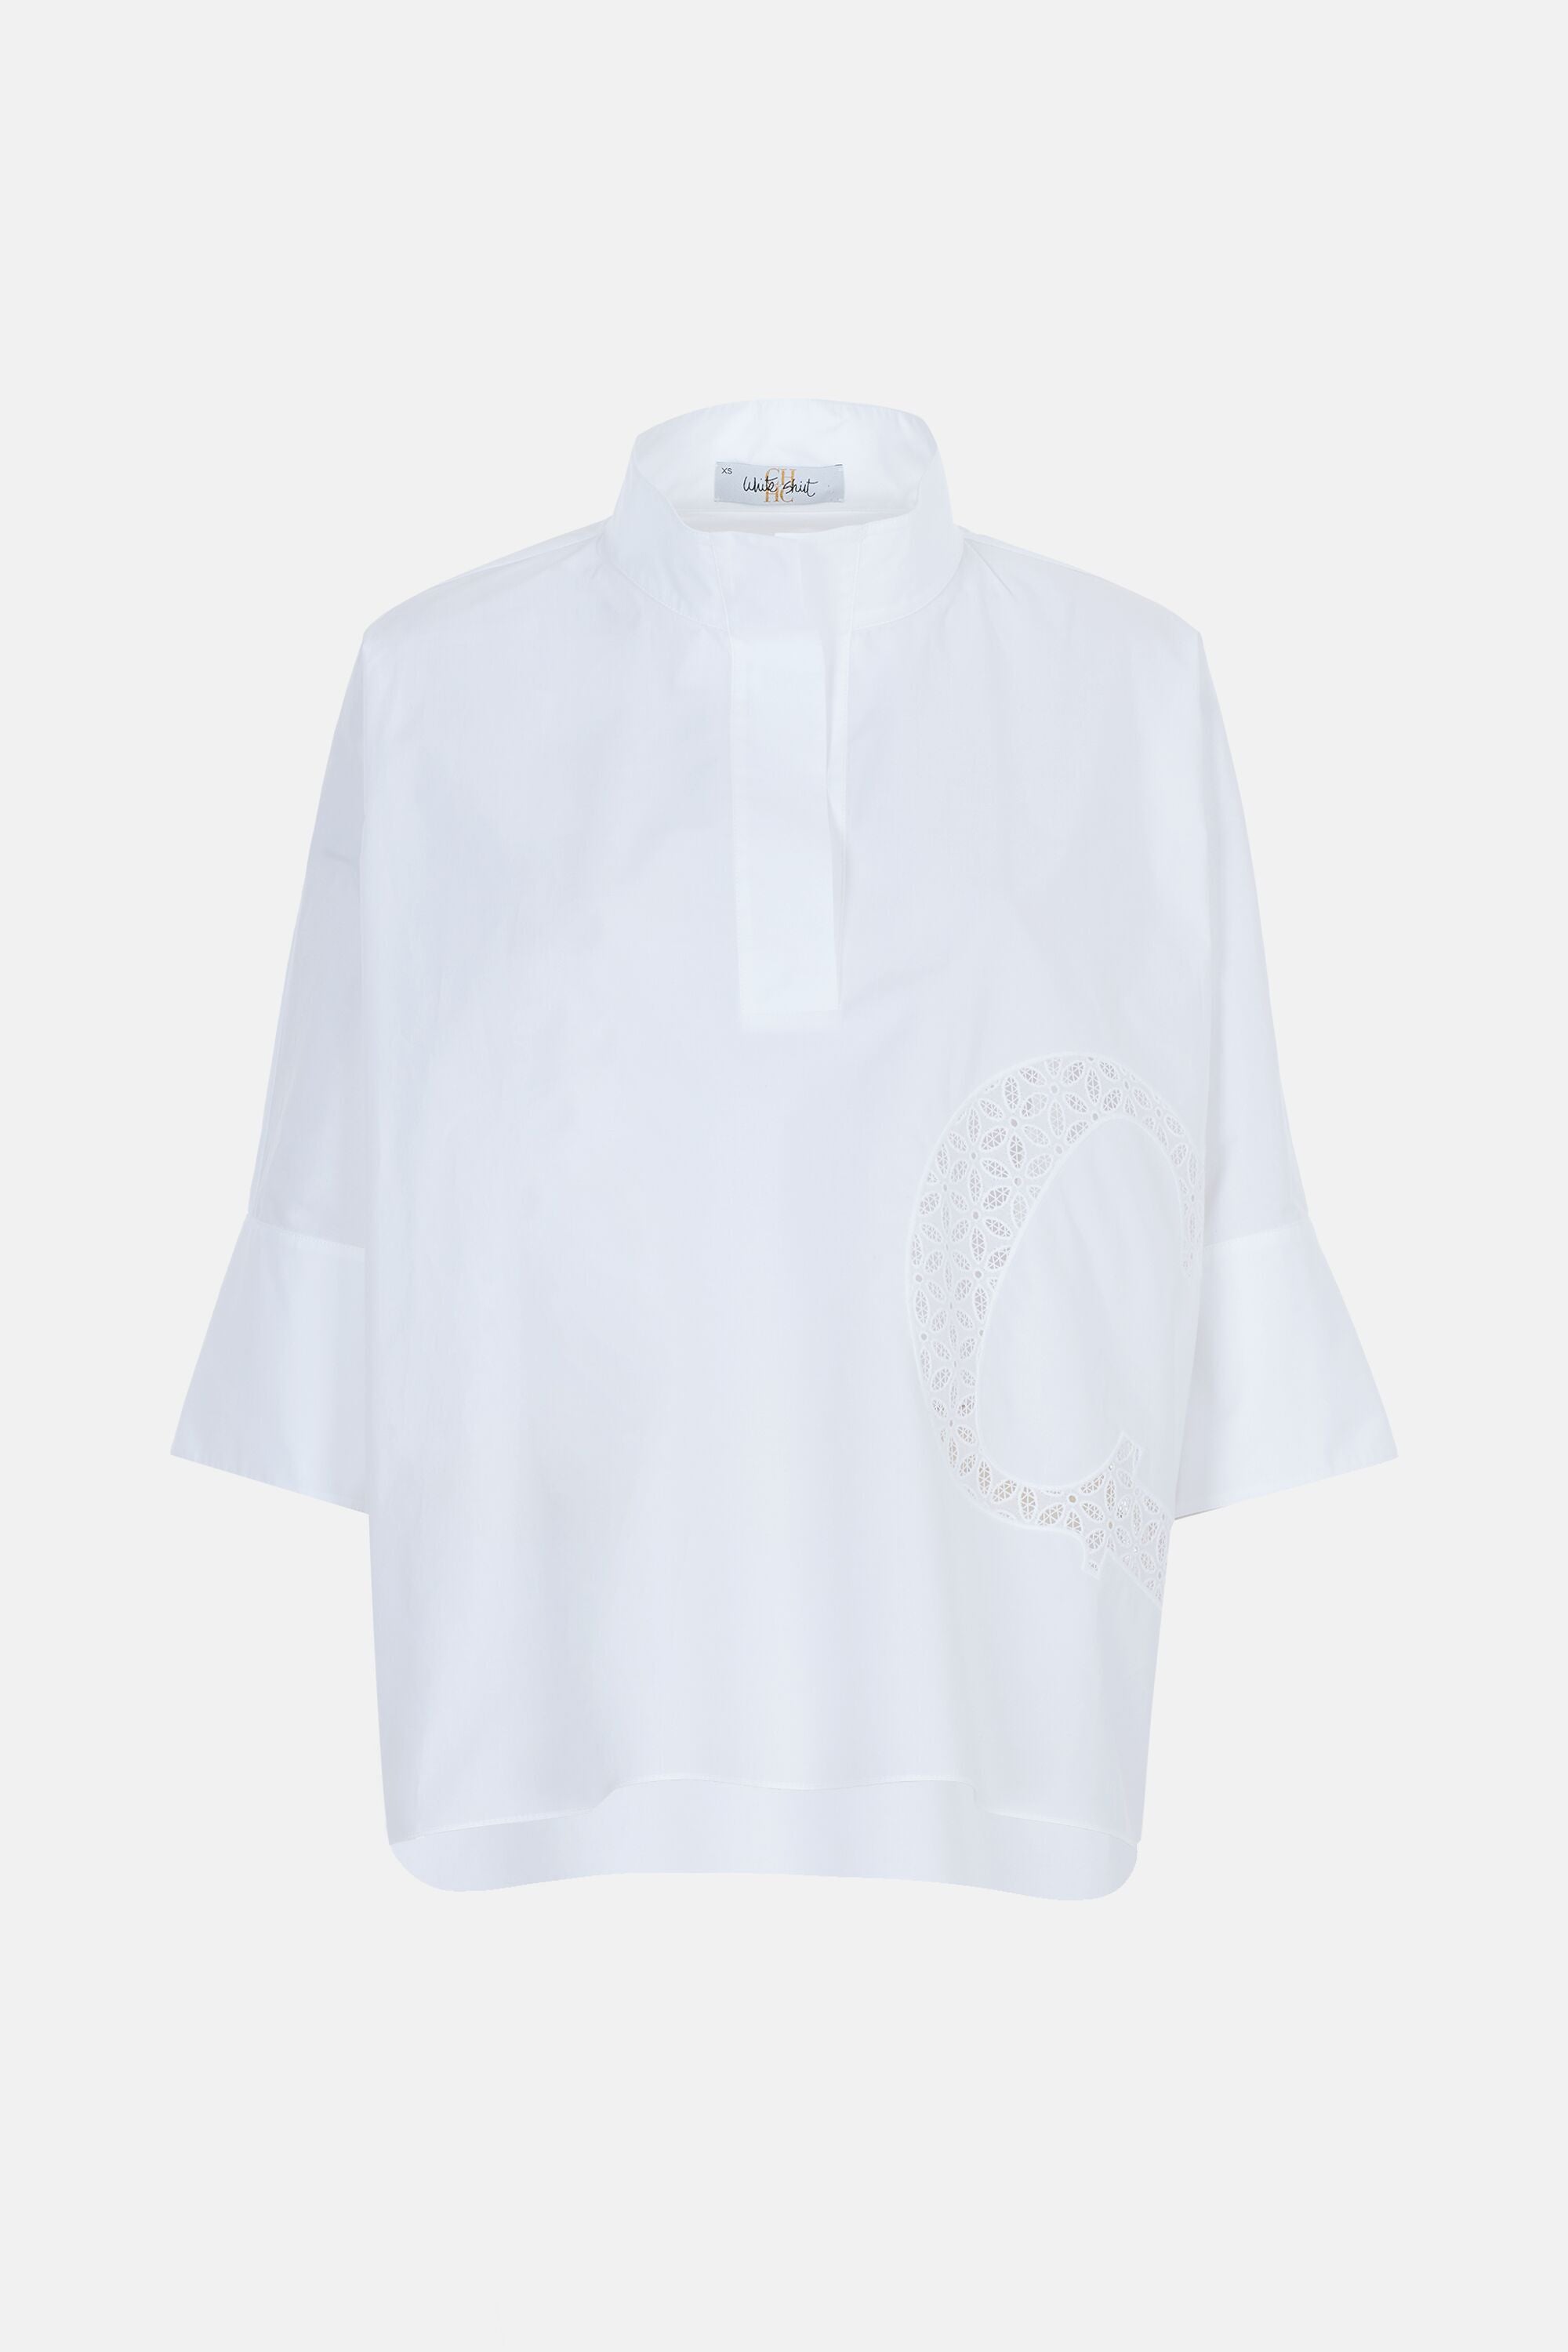 Initials Insignia poplin oversize White Shirt